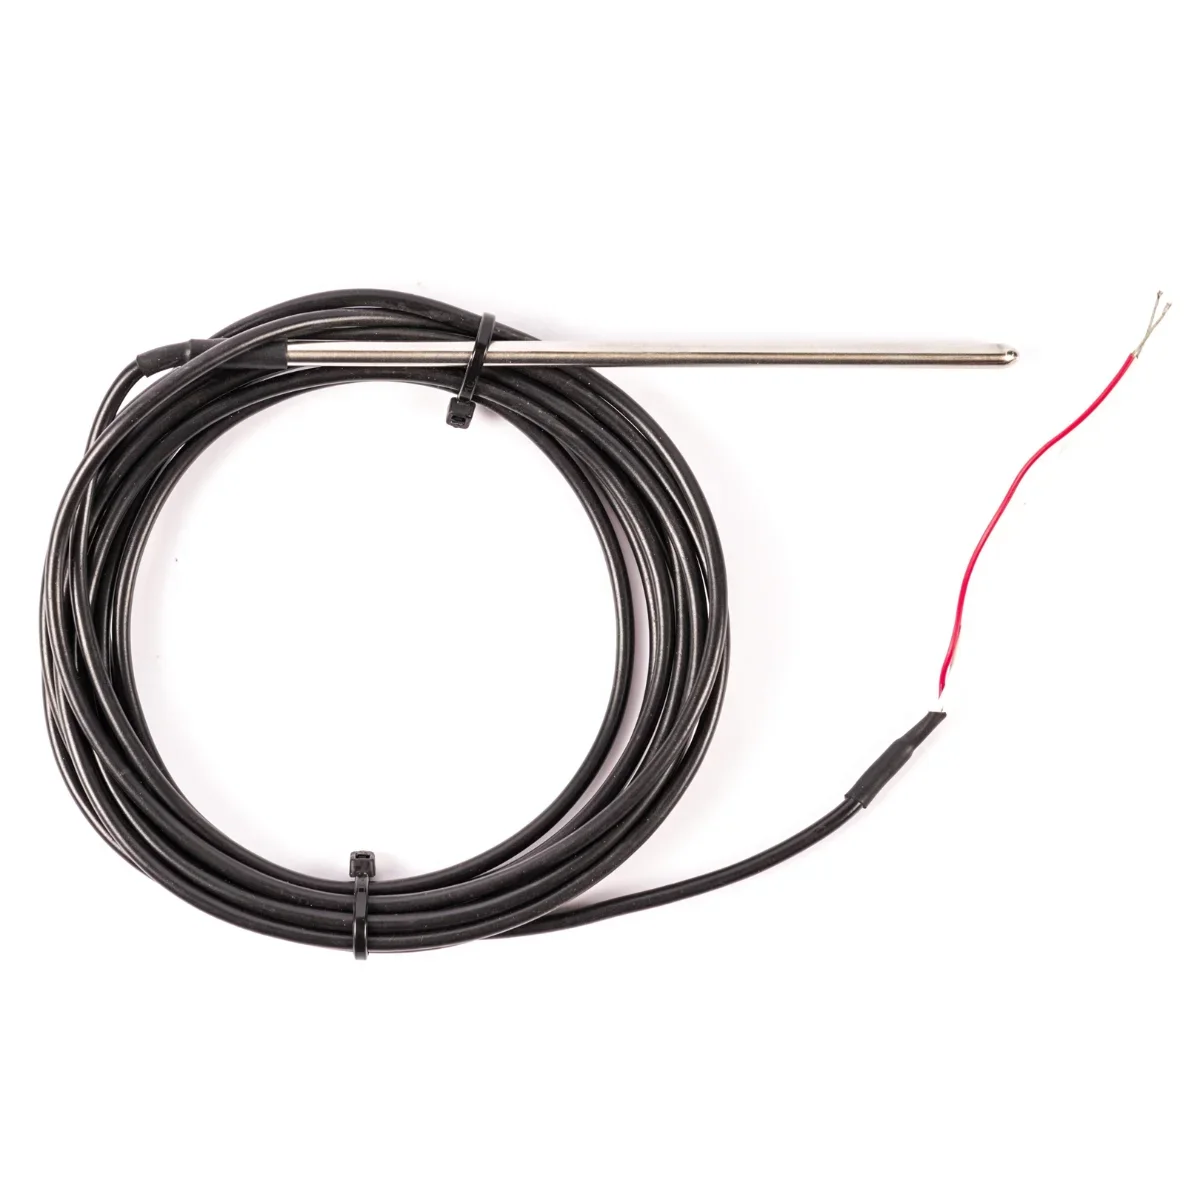 Cable RTD sensor with a metal pocket